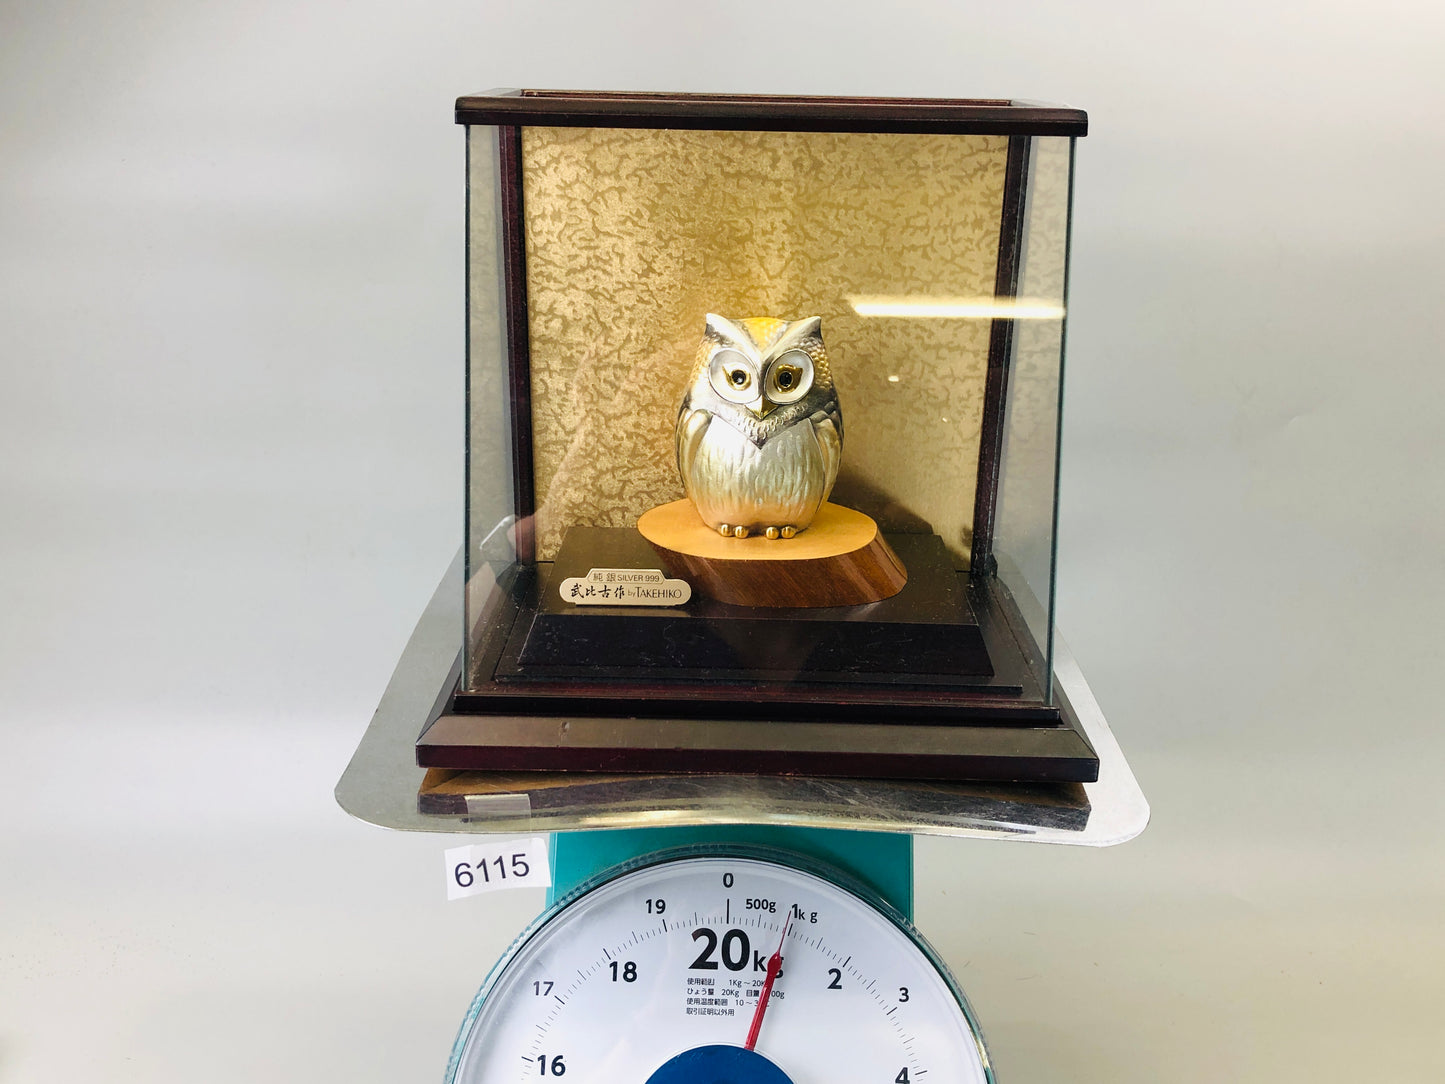 Y6115 [VIDEO] OKIMONO Silver owl figurine signed glass case Japan antique interior decor